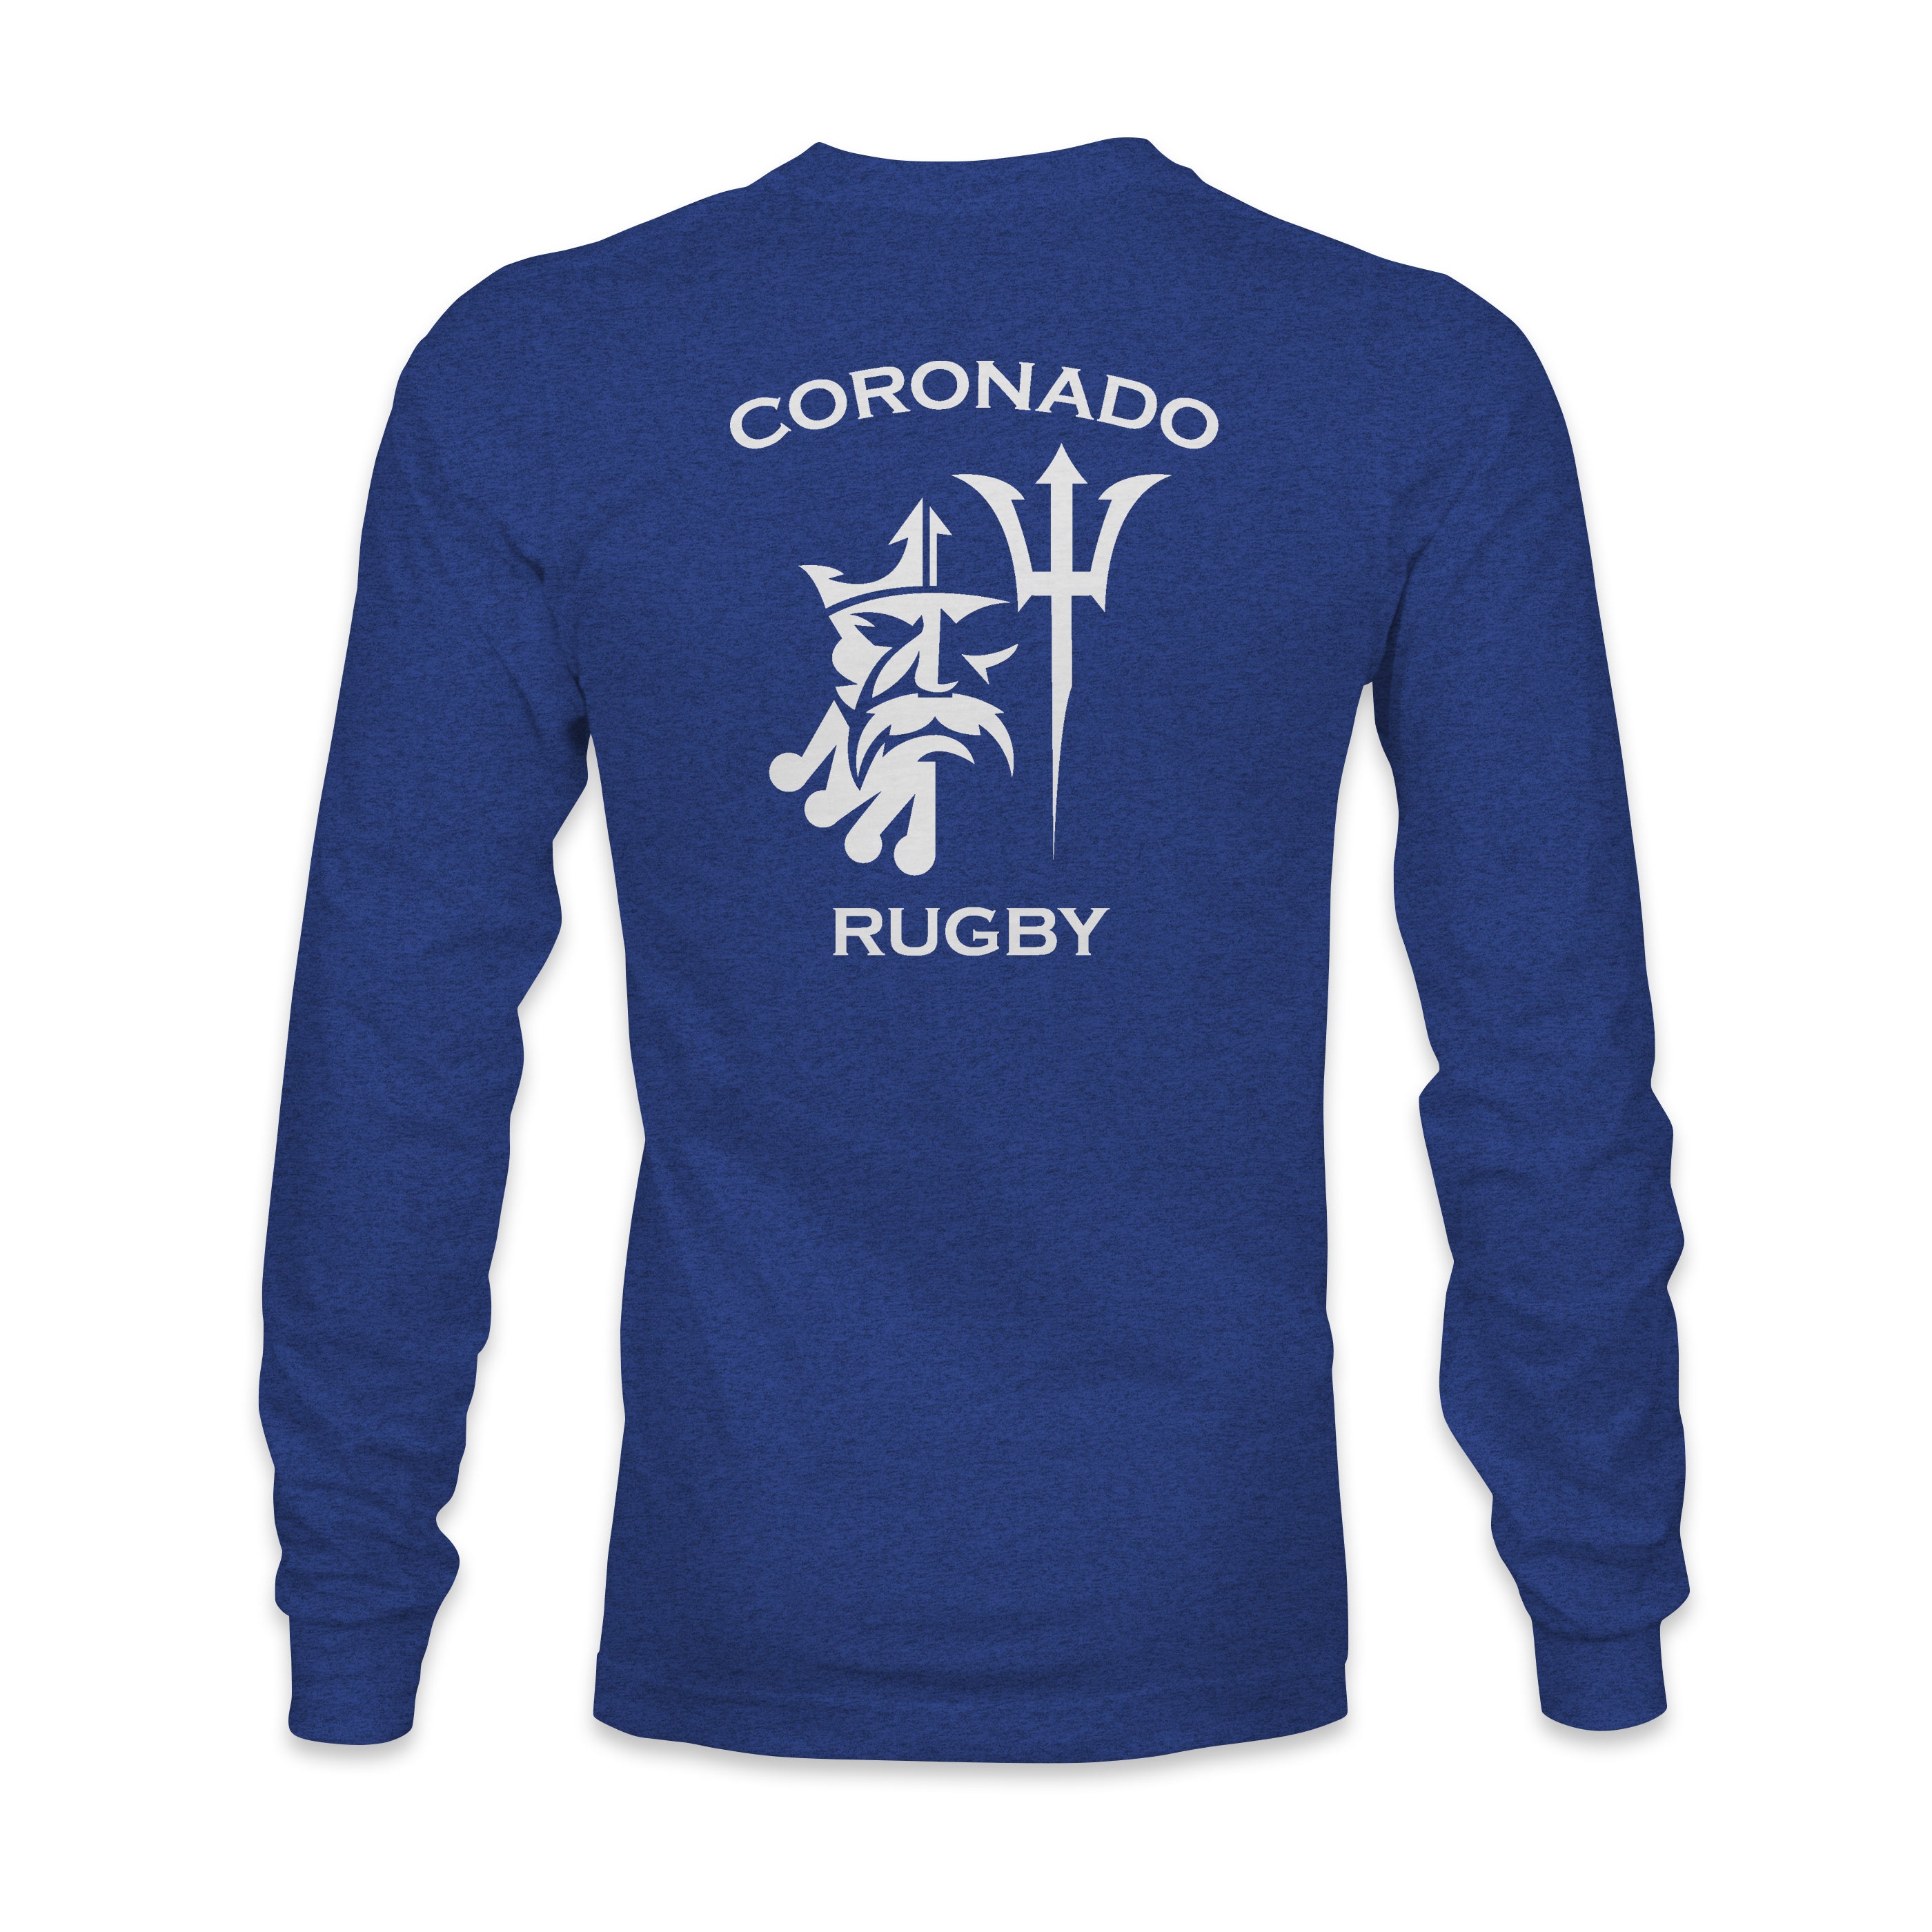 Coronado Rugby Long Sleeve